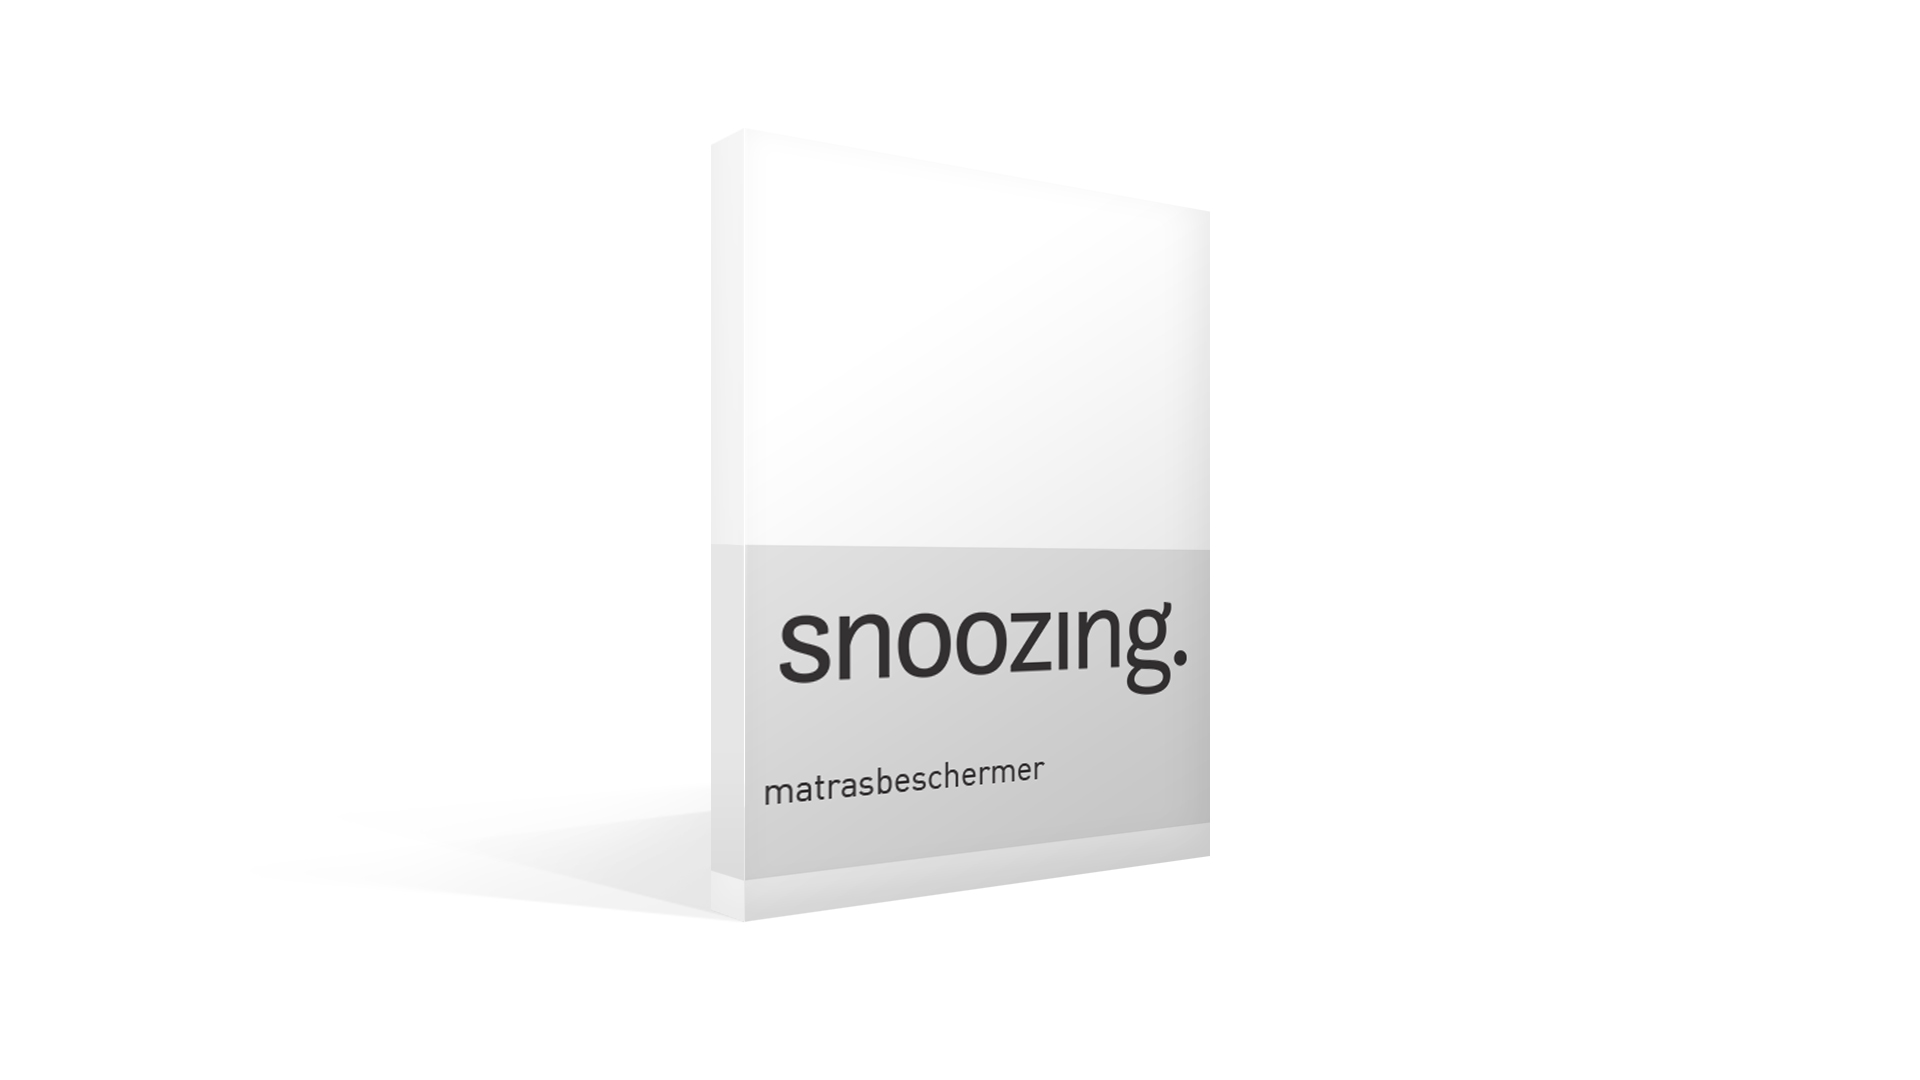 Snoozing badstof matrasbeschermer